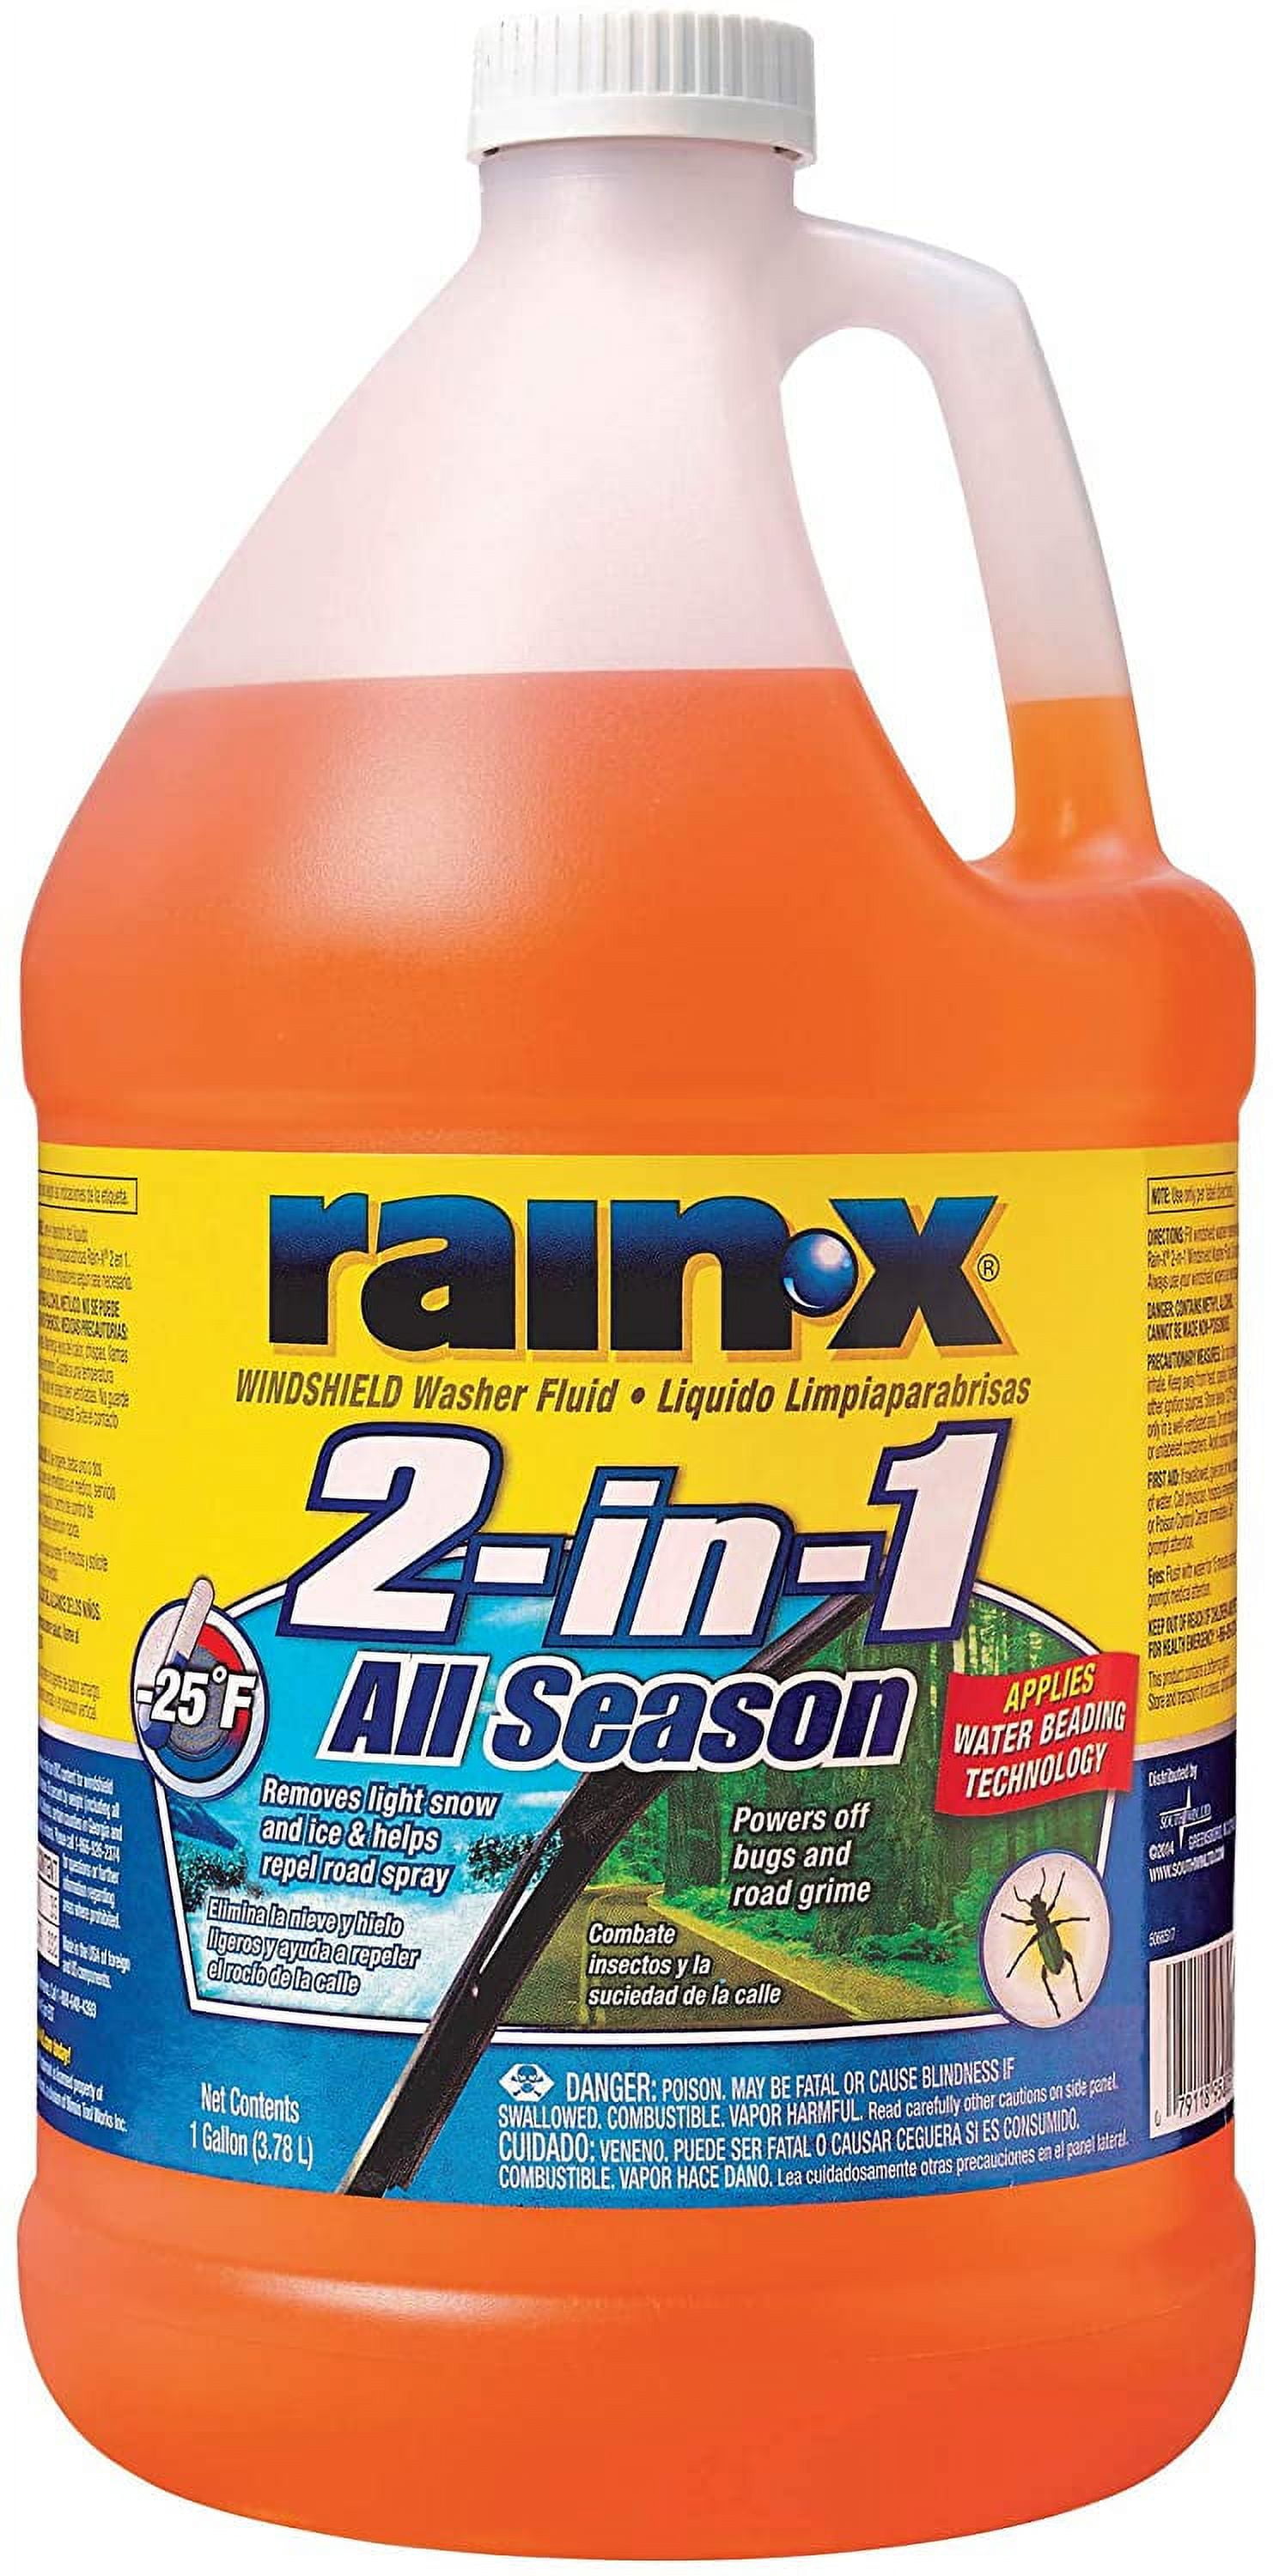 Windex All-Season Windshield Washer Fluid Gallon Only $1.45 w